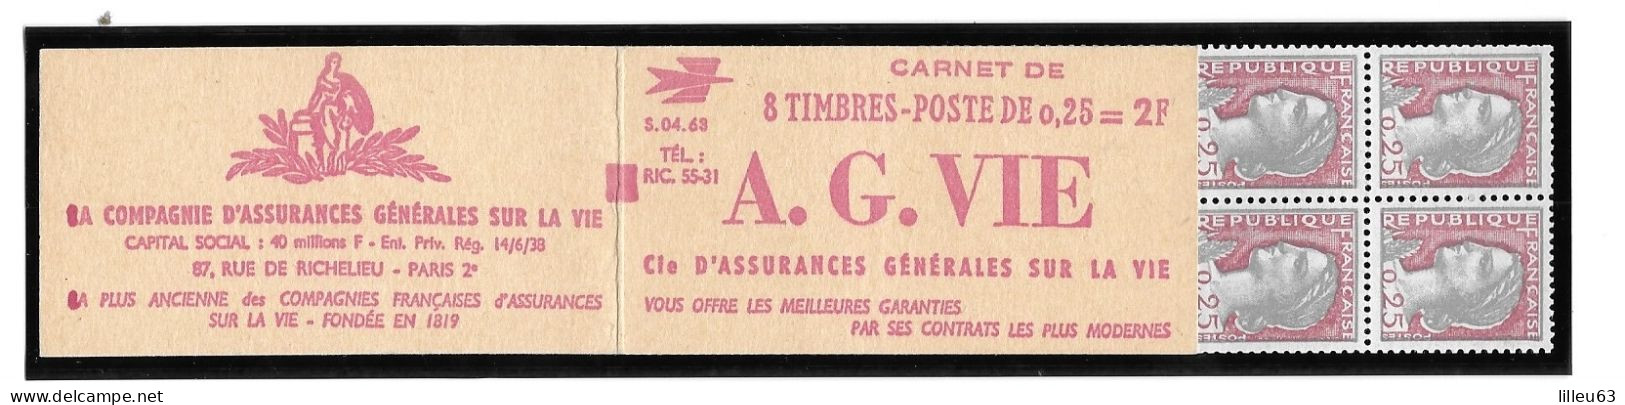 Rare Variete 2 Carnets Marianne Decaris  1263  Carnet 367 Et 367a  Maury  Série 4.63  6mm Au Lieu De 8mm SUP - Modernos : 1959-…